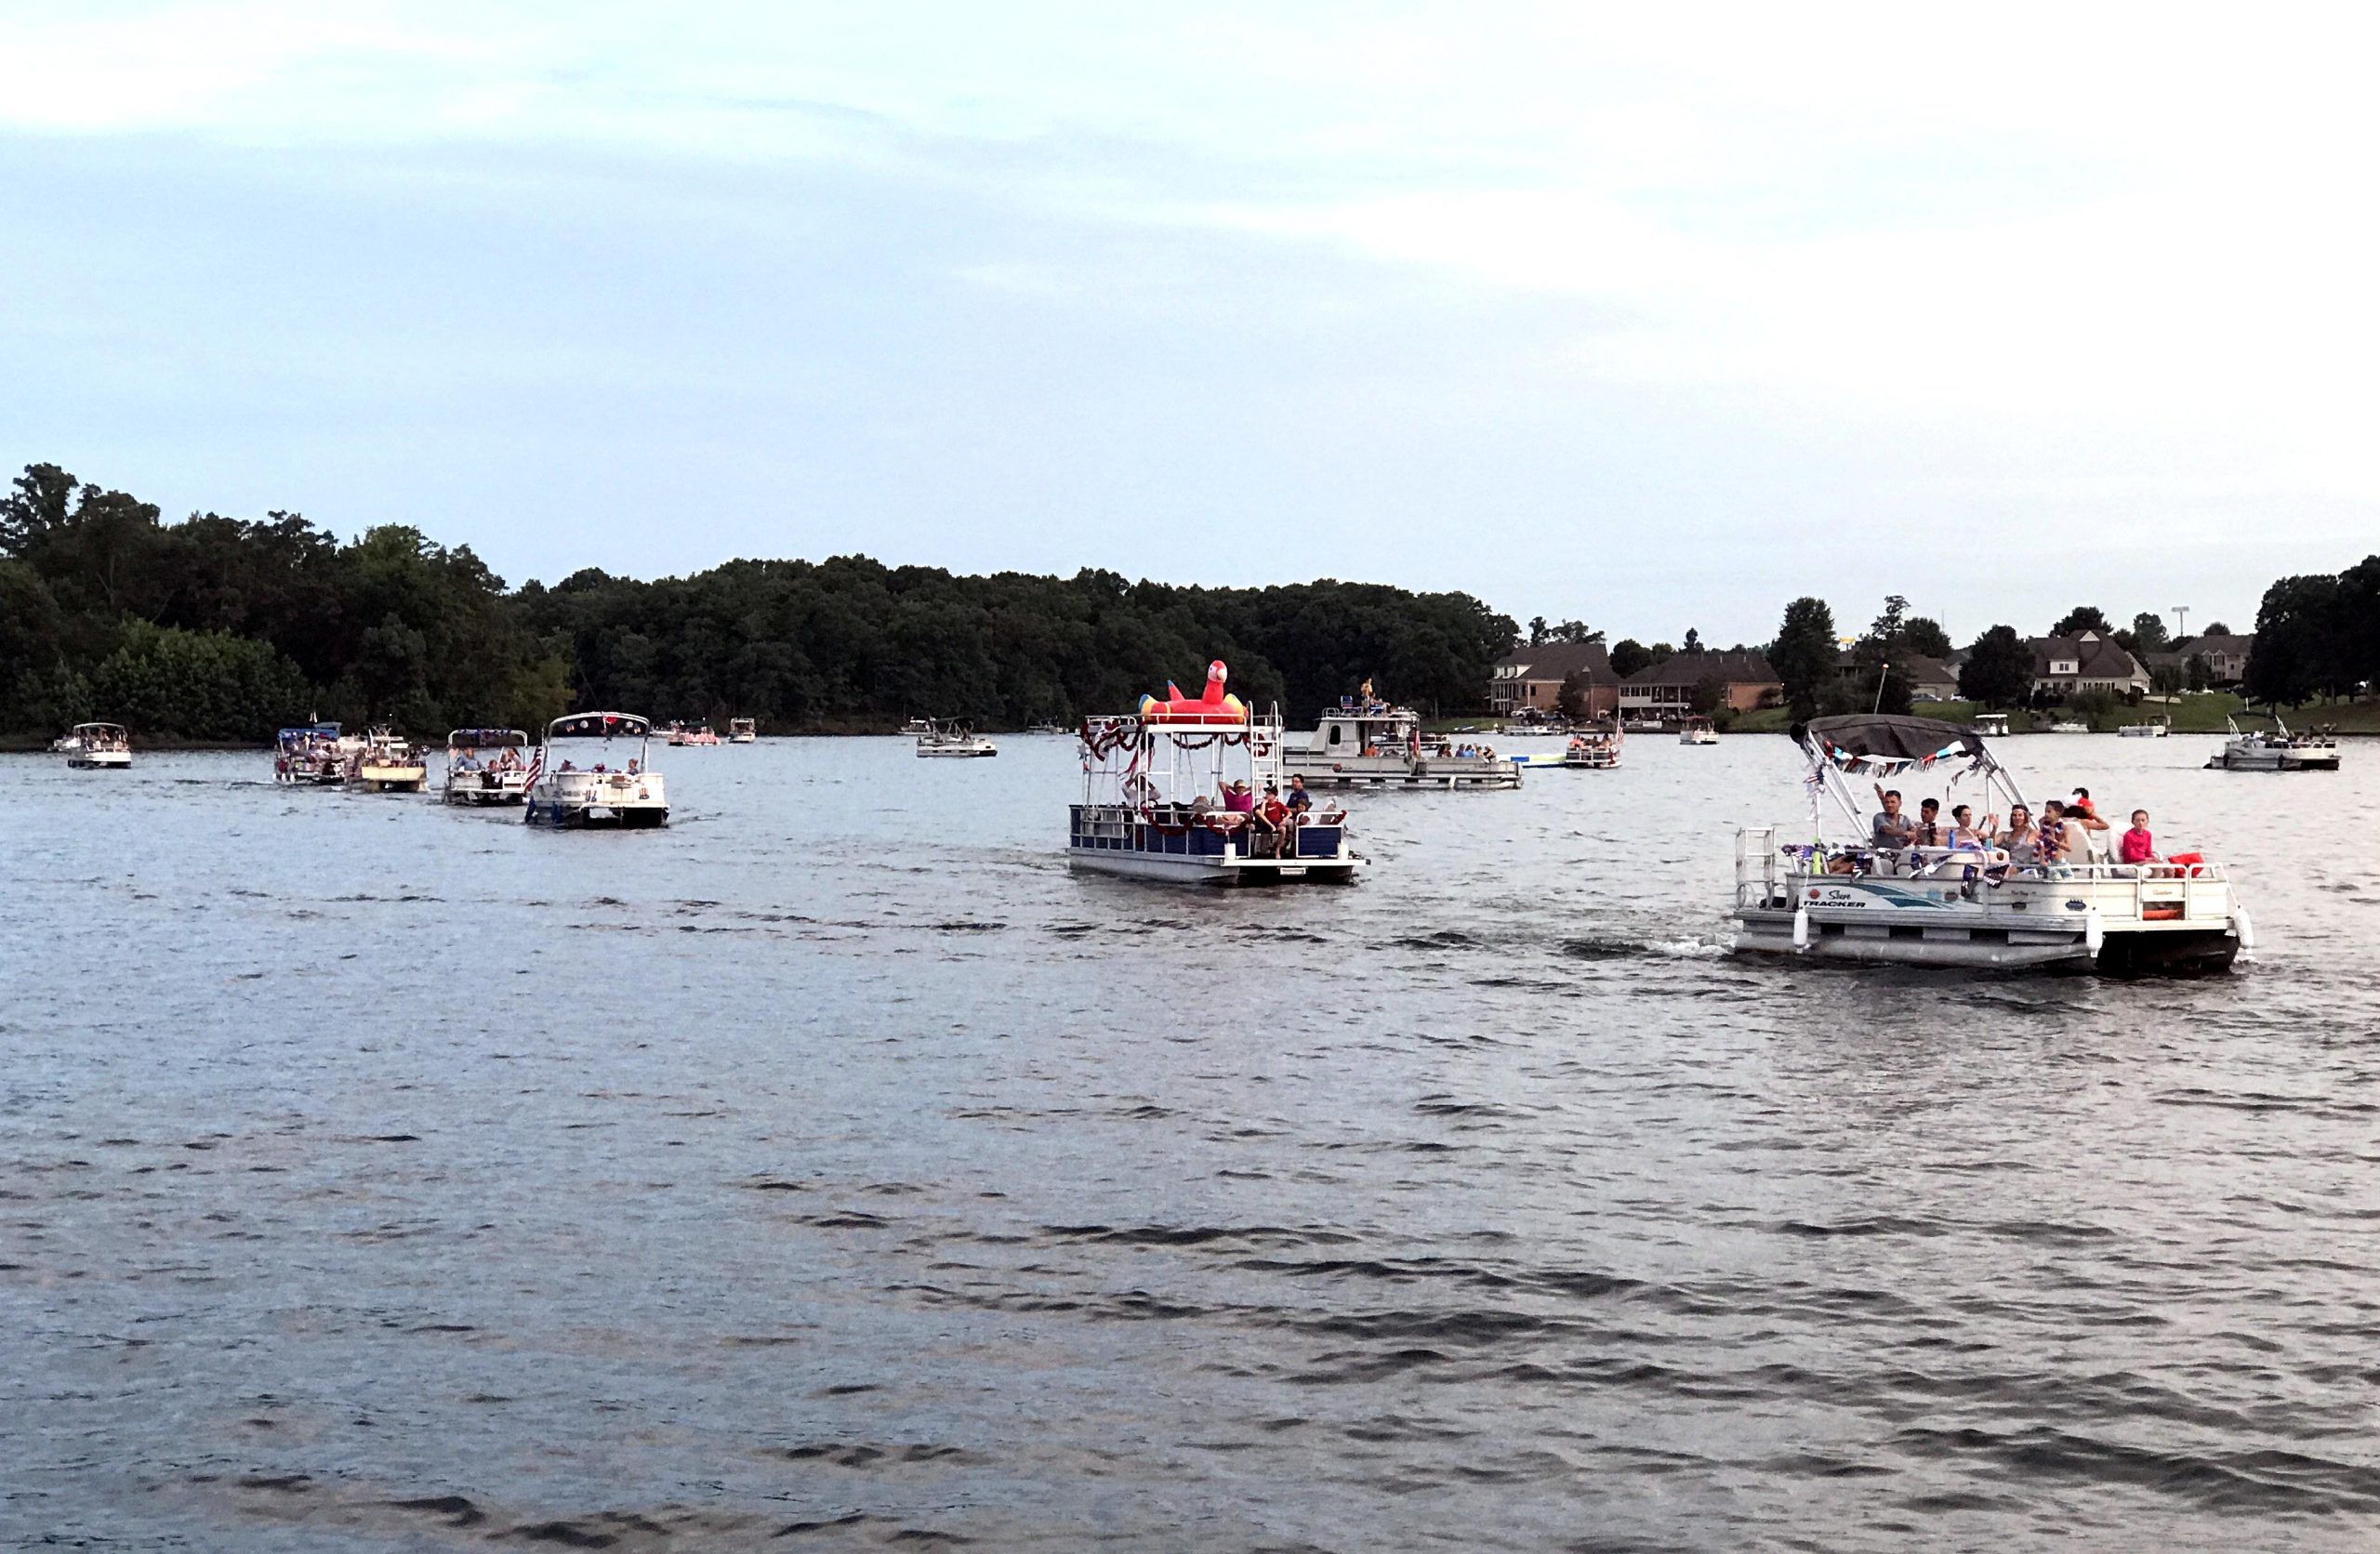 The boat parade on Garner Lake in Lakeland TN